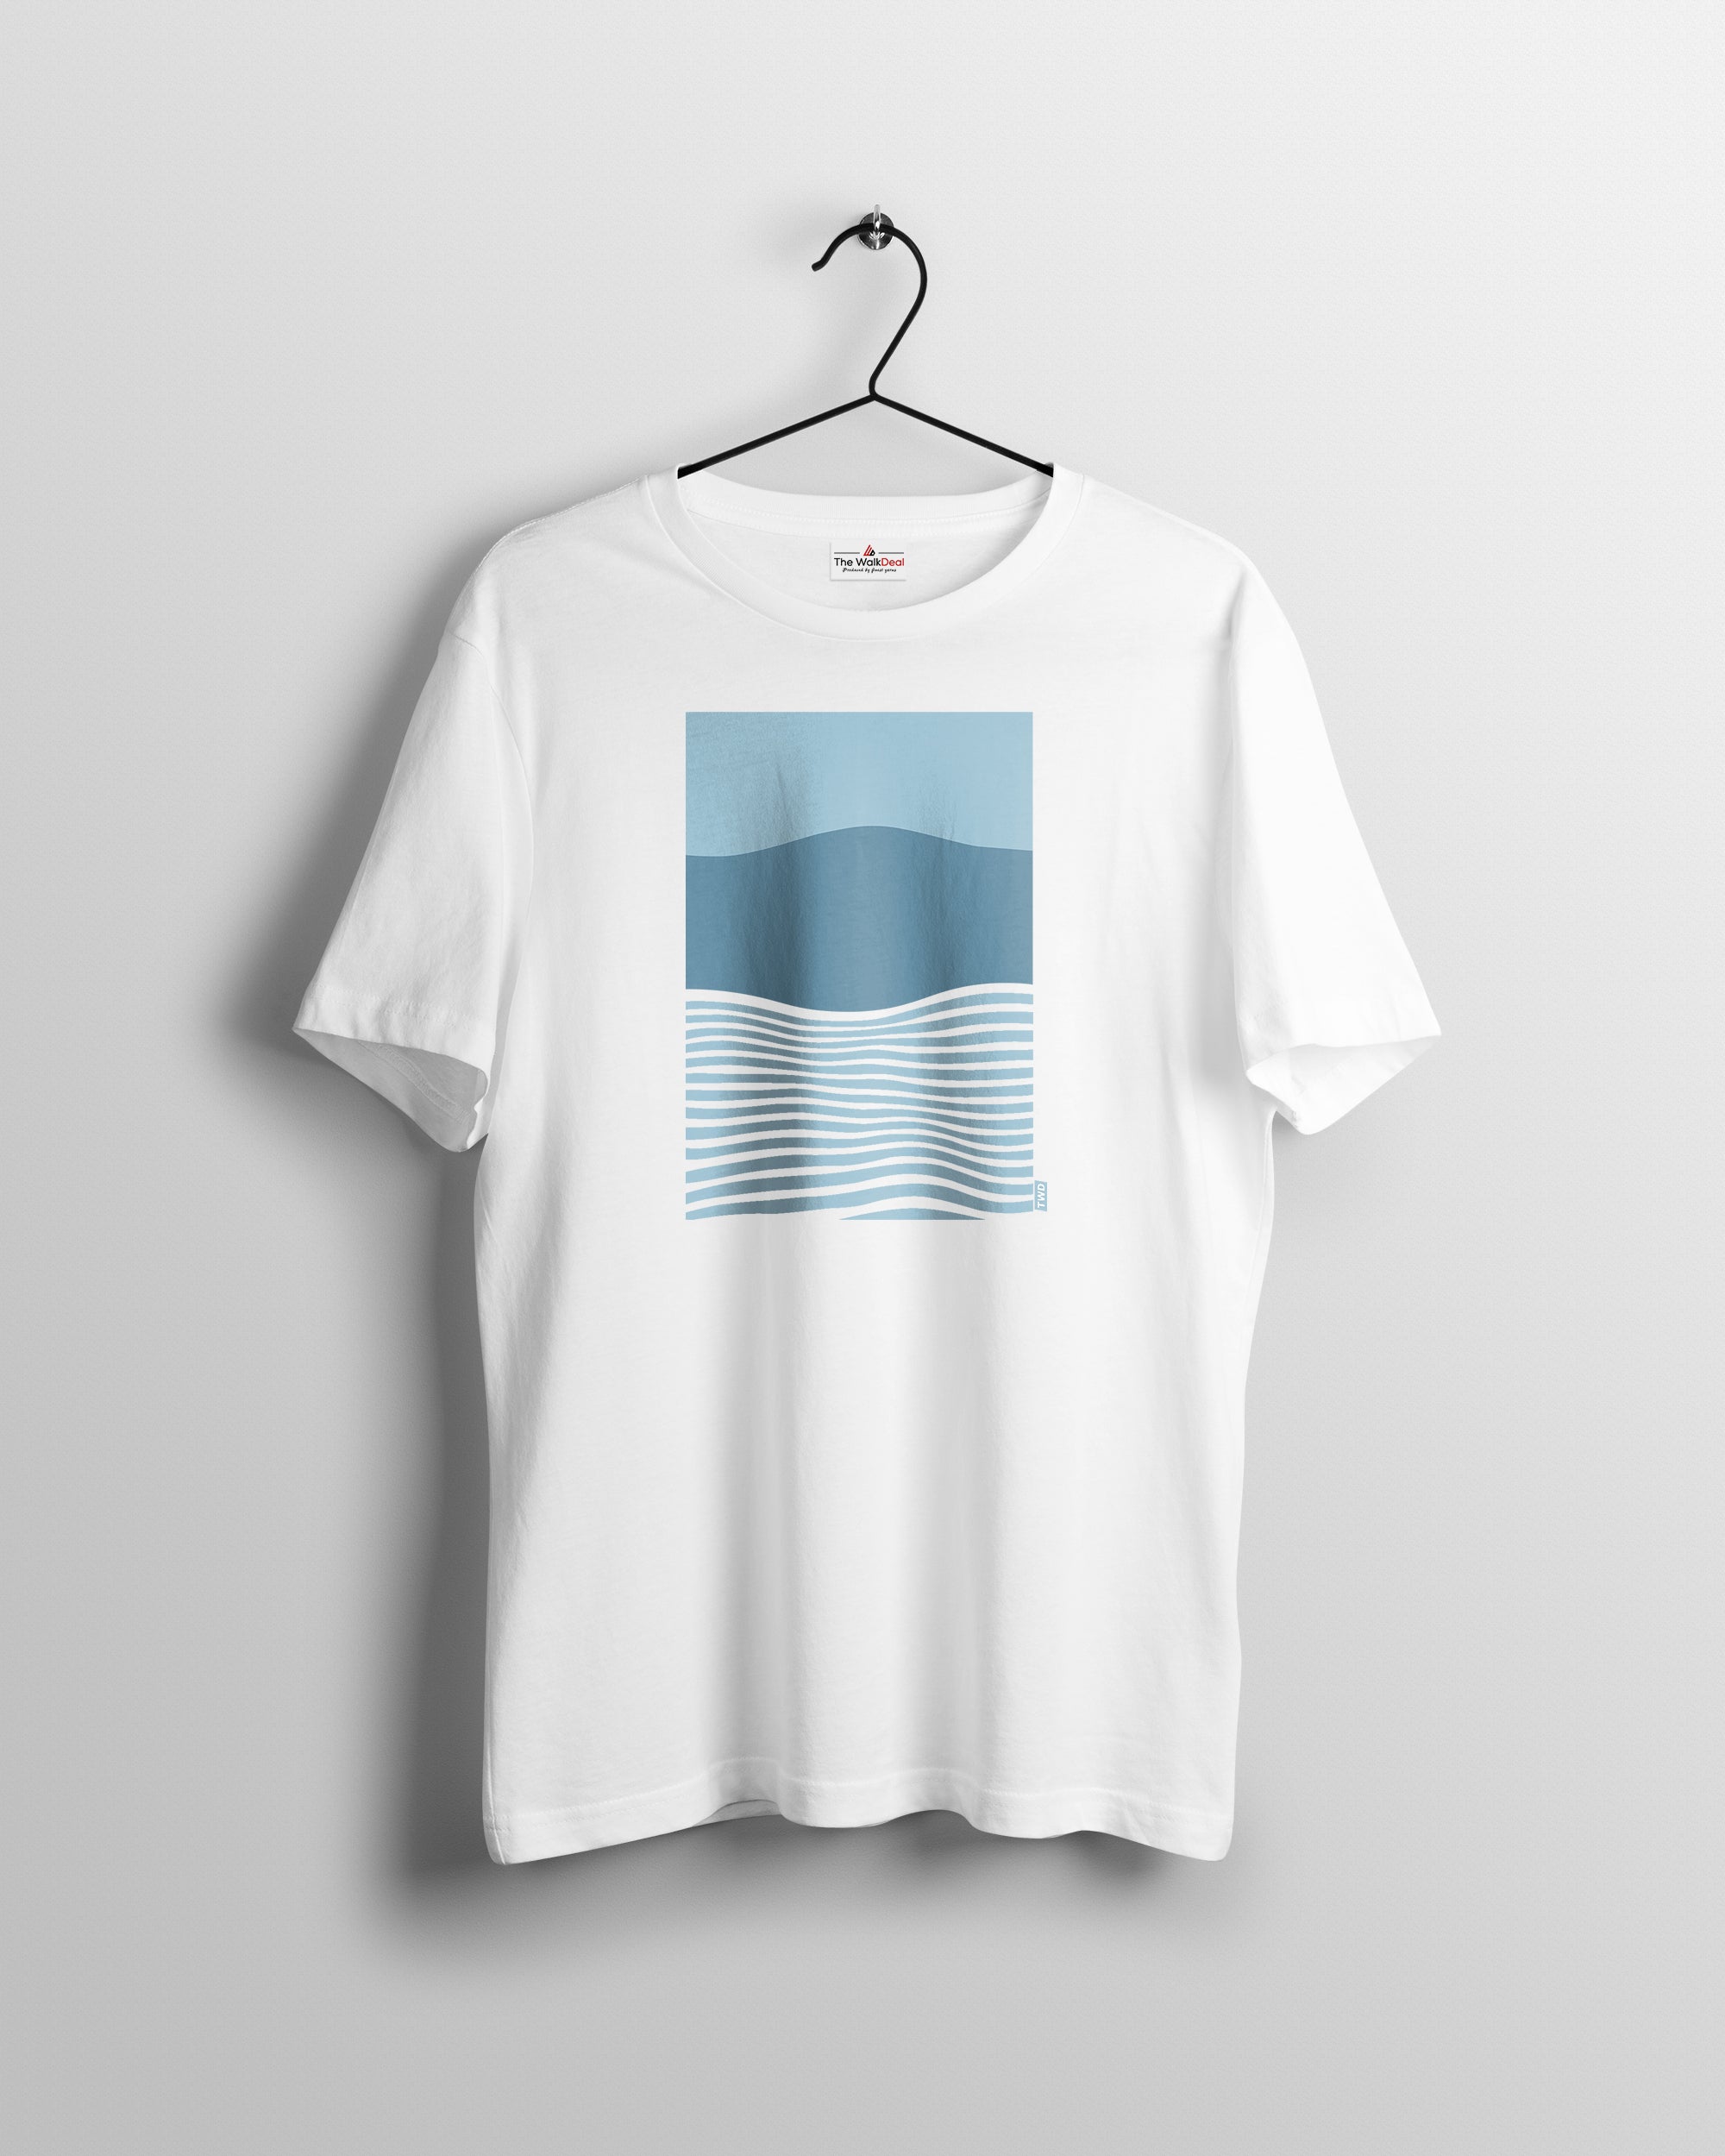 Colour_Wave T-Shirts For Men || White || Stylish Tshirts || 100% Cotton || Best T-Shirt For Men's